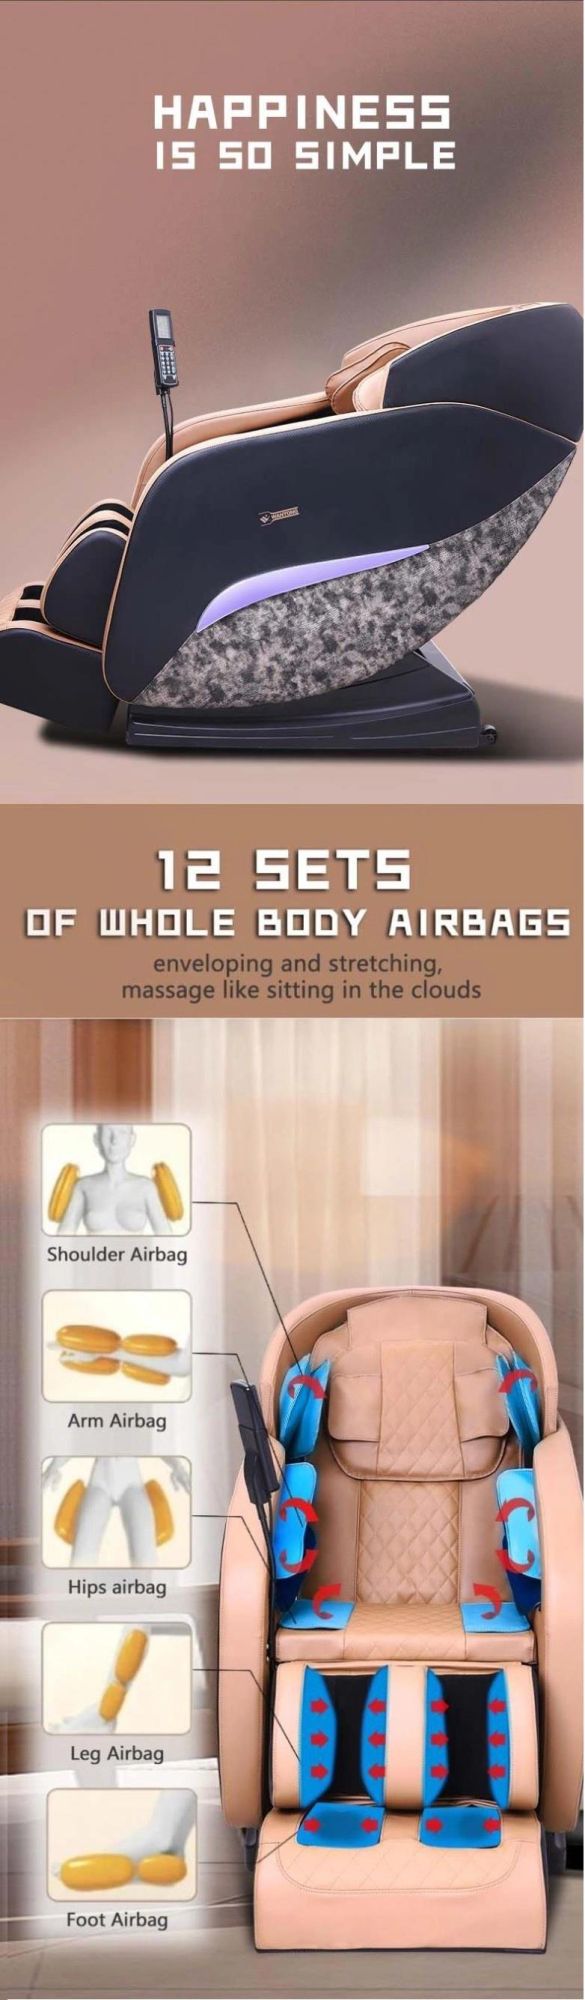 Double SL 4D Electric Full Body Zero Gravity Luxury Office Foot SPA Best Massage Chair